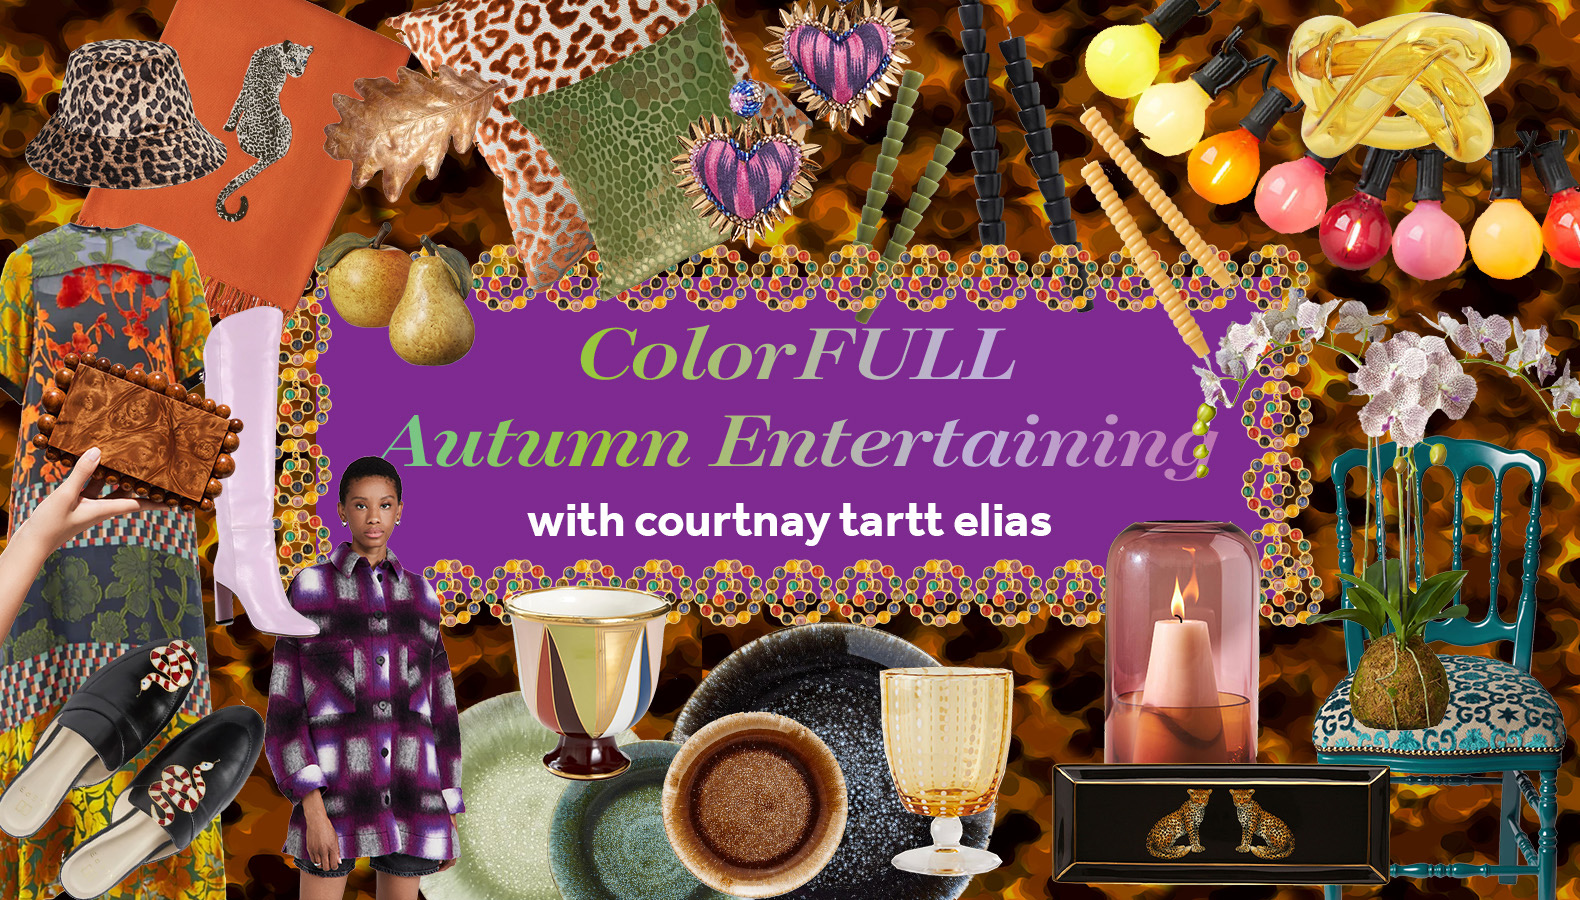 ColorFULL Autumn Entertaining